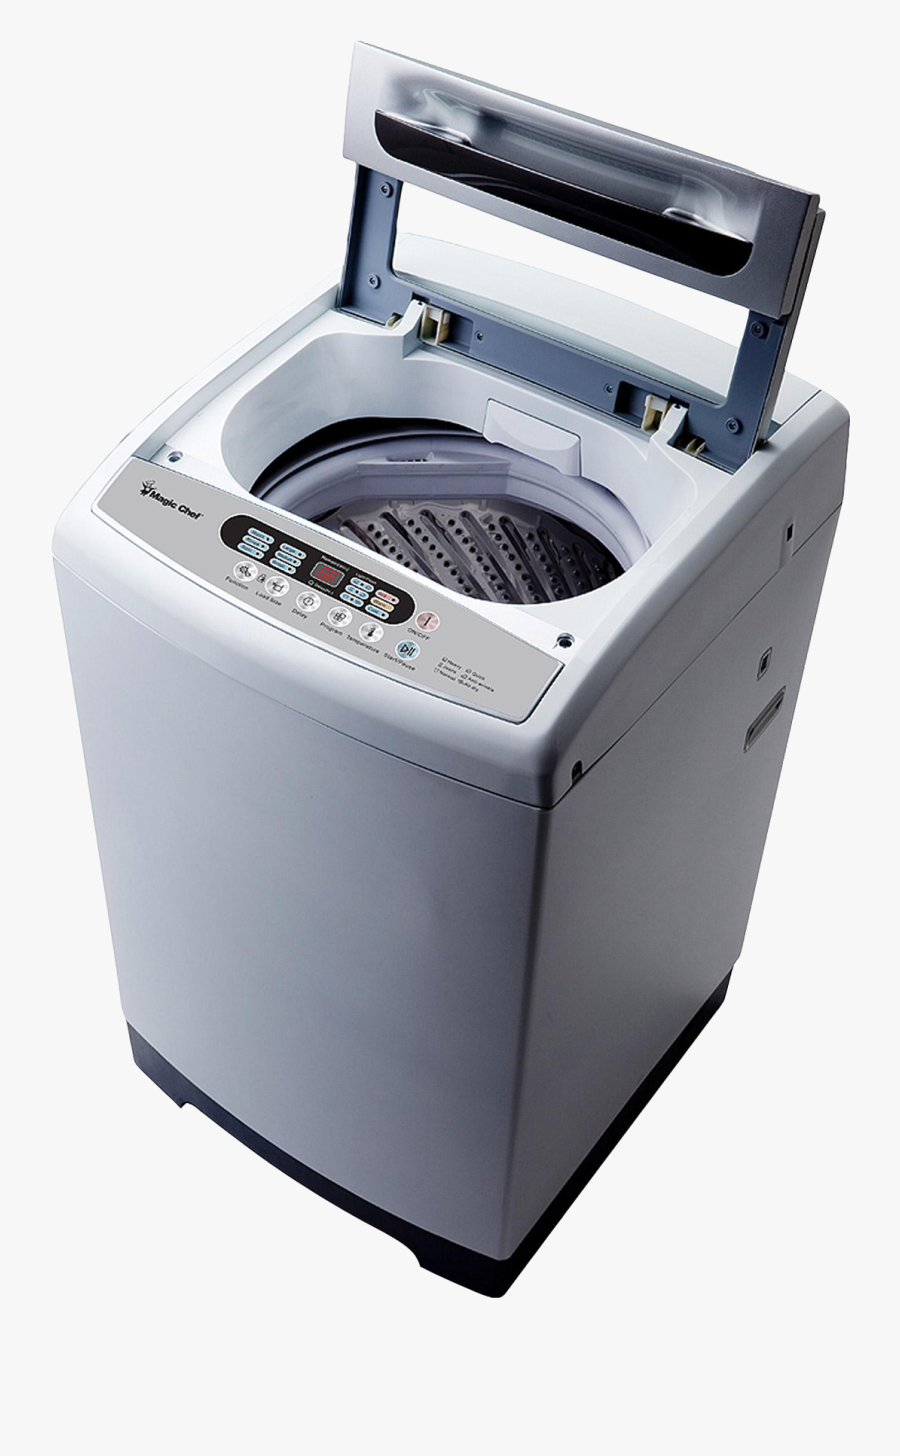 Machine Image Free Clipart Hd - Washing Machine Image Download, Transparent Clipart